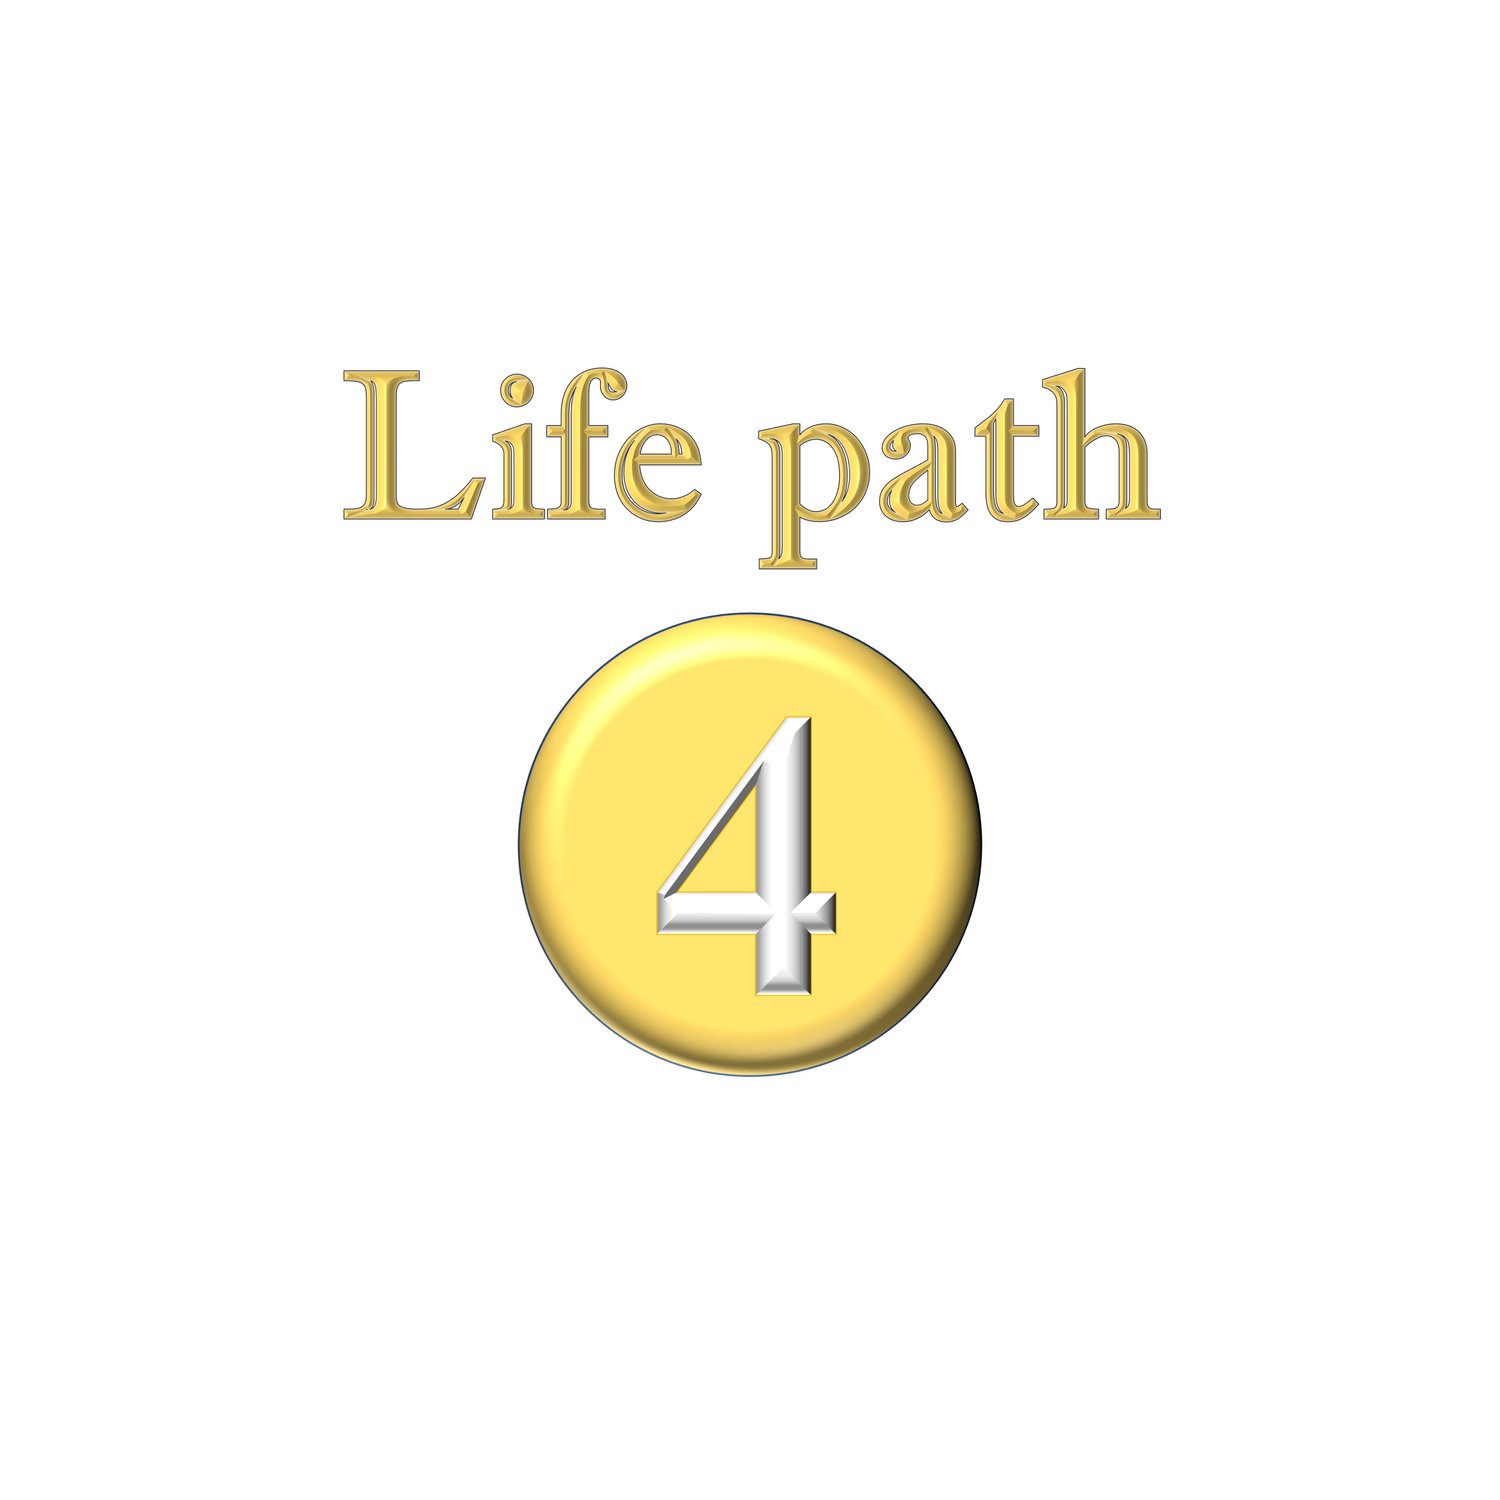 Life path 4